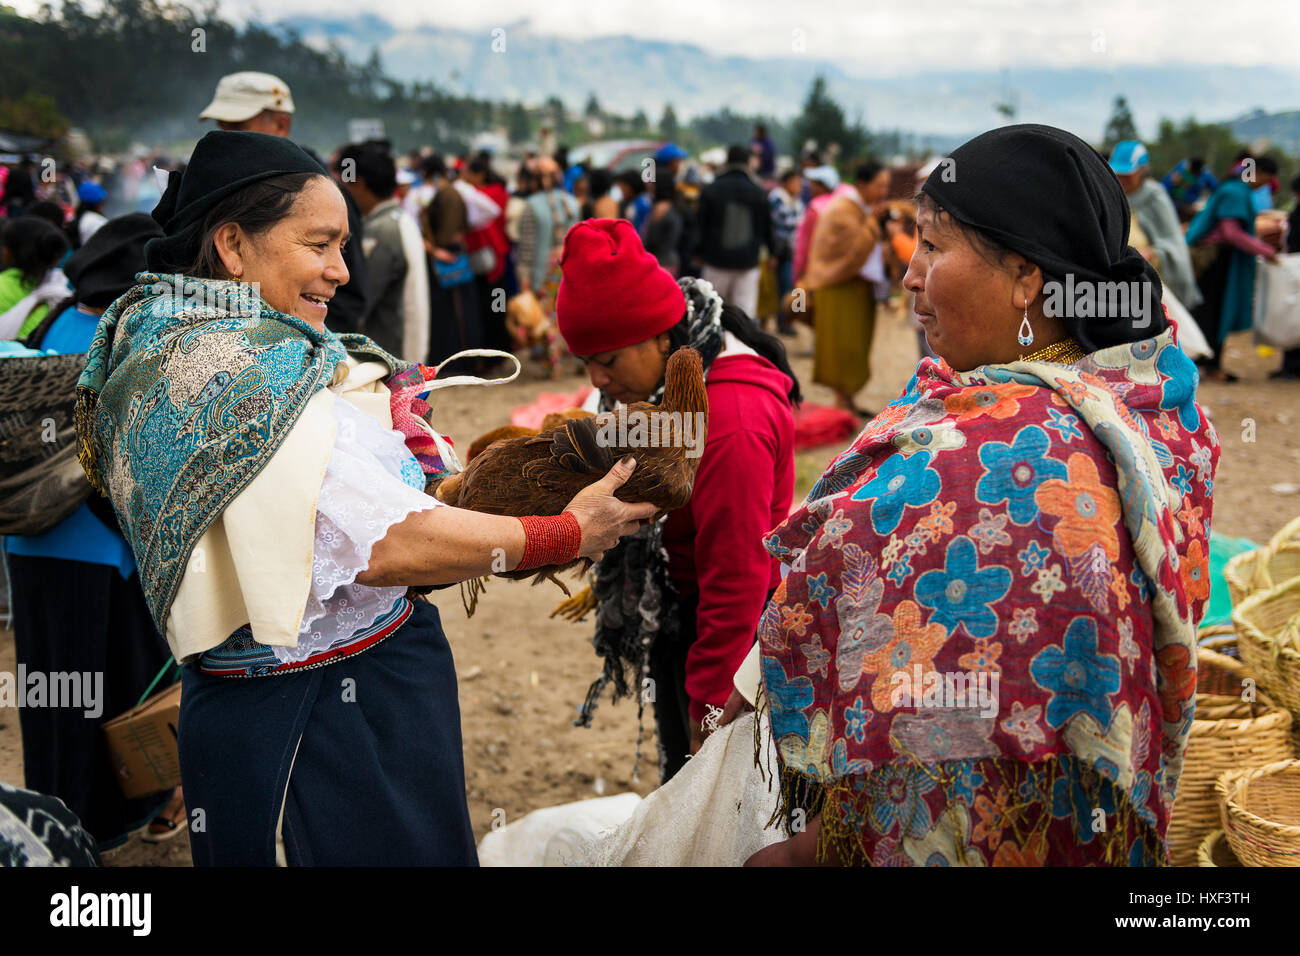 Otavalo, Ecuador - February 1, 2014: Woman selling a chicken at the livestock market of the town of Otavalo in Ecuador. Stock Photo